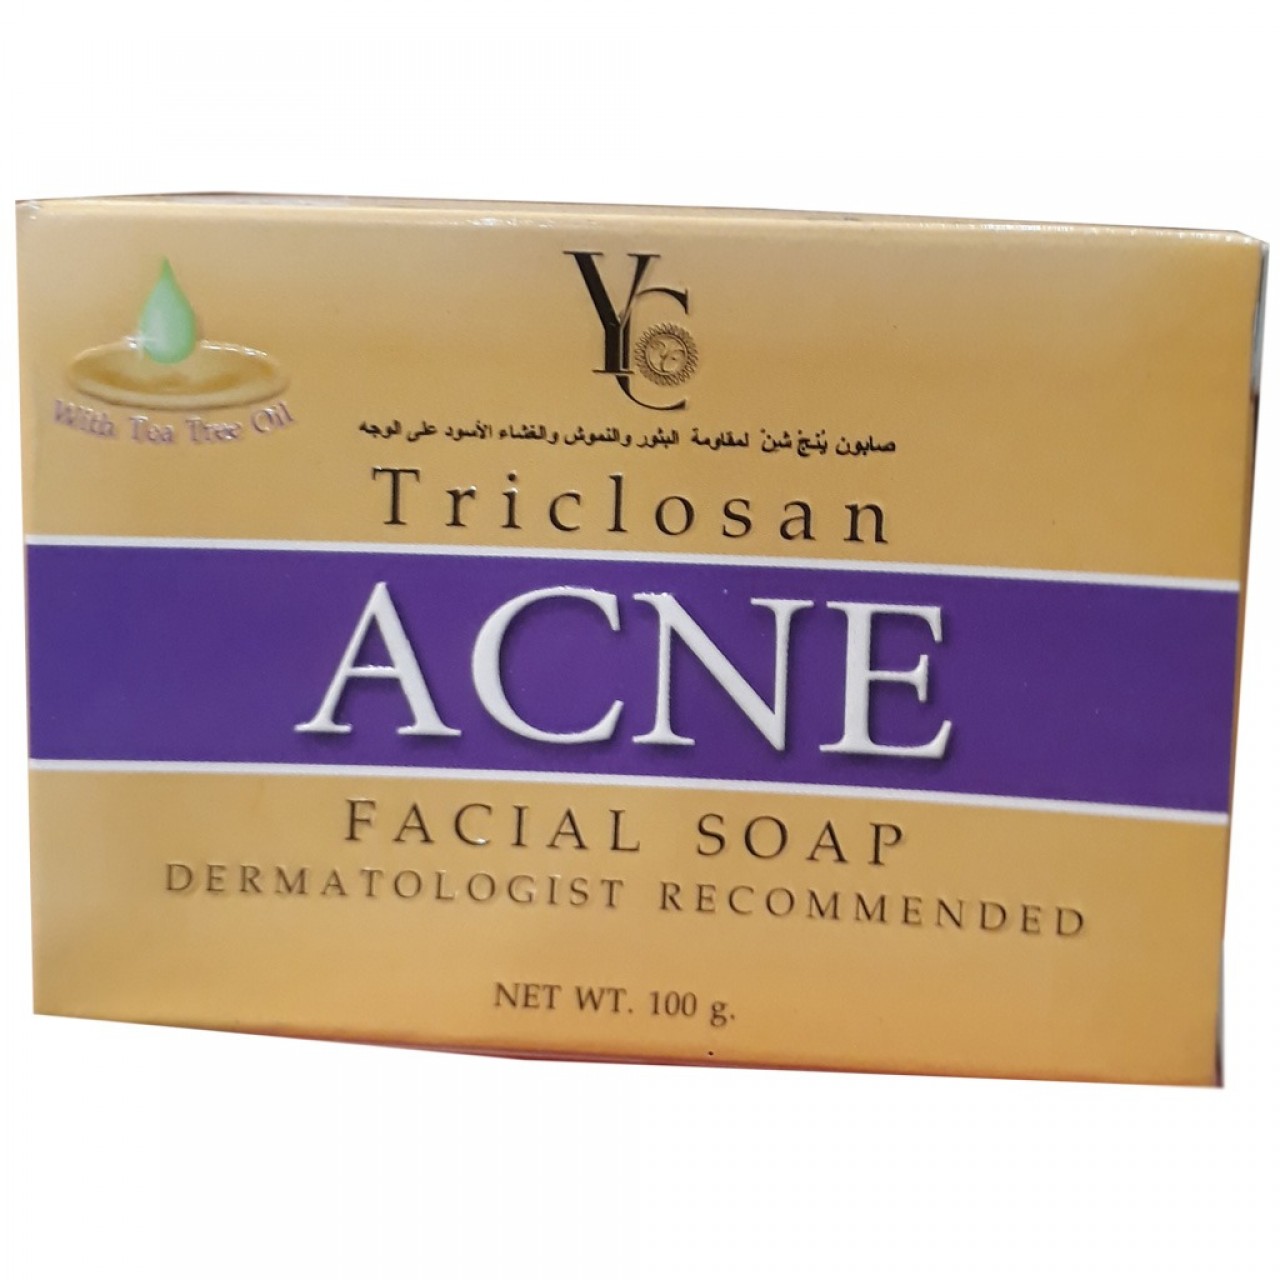 YC Triclosan Acne Facial Soap.